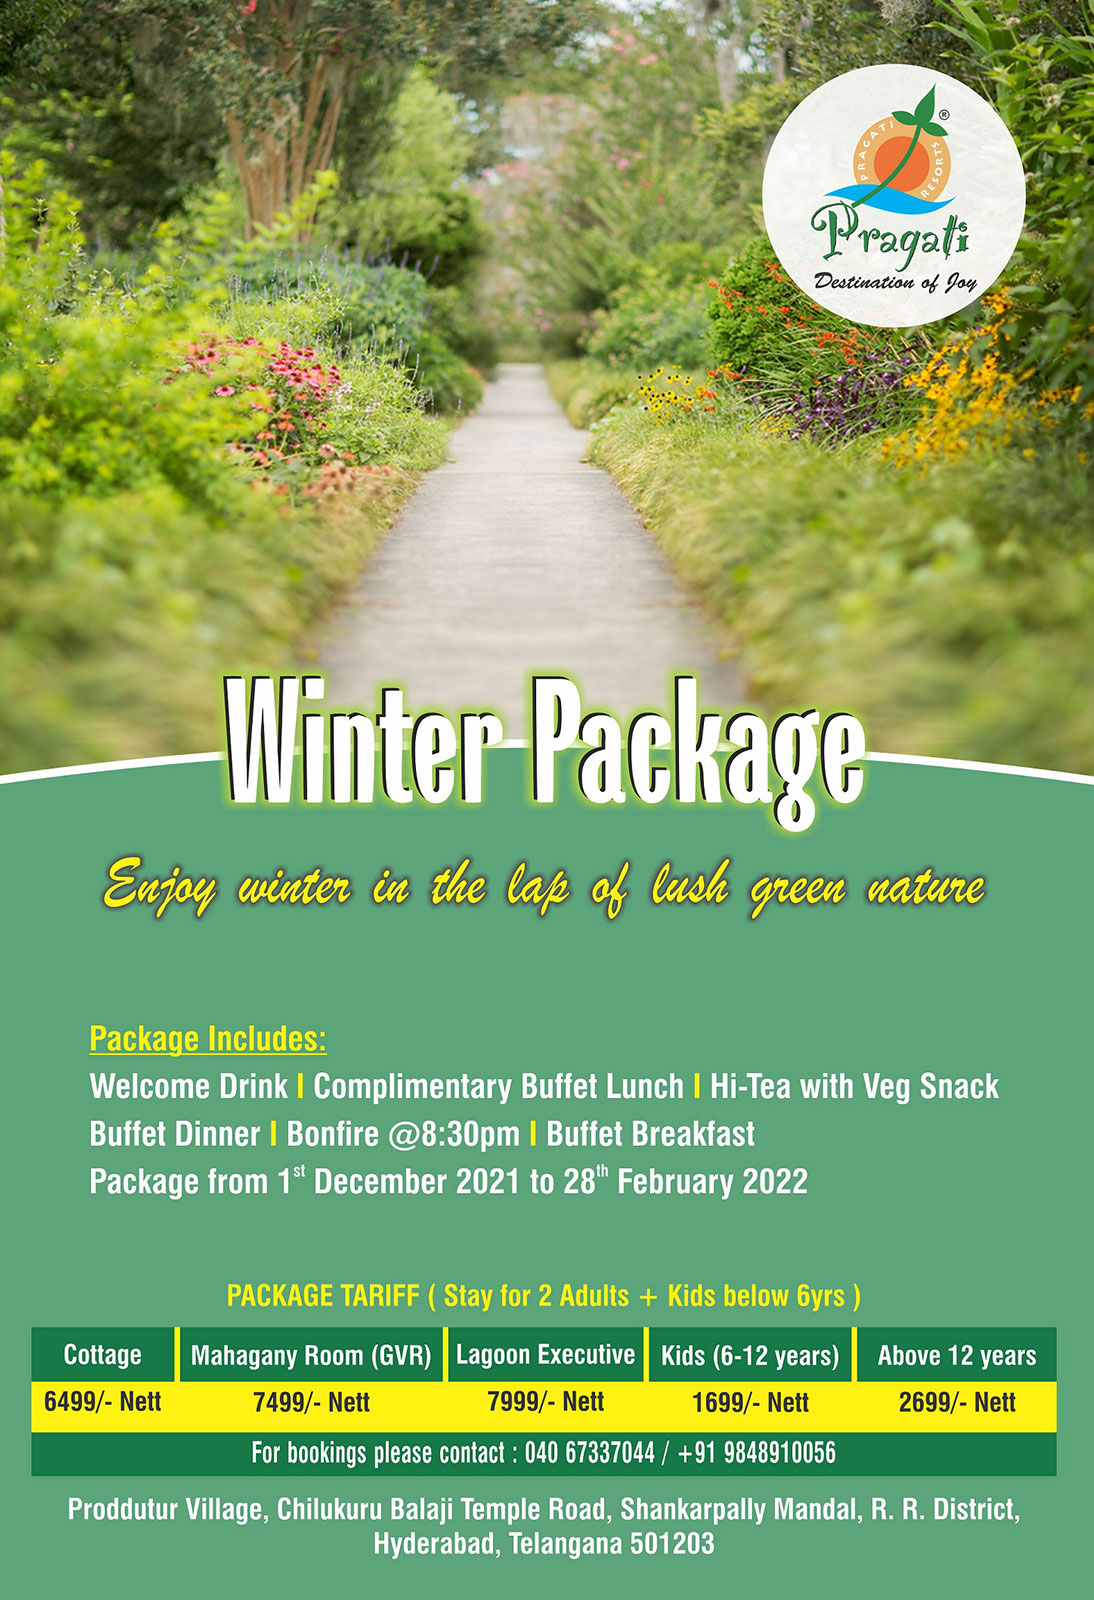 Winter Package in Hyderabad